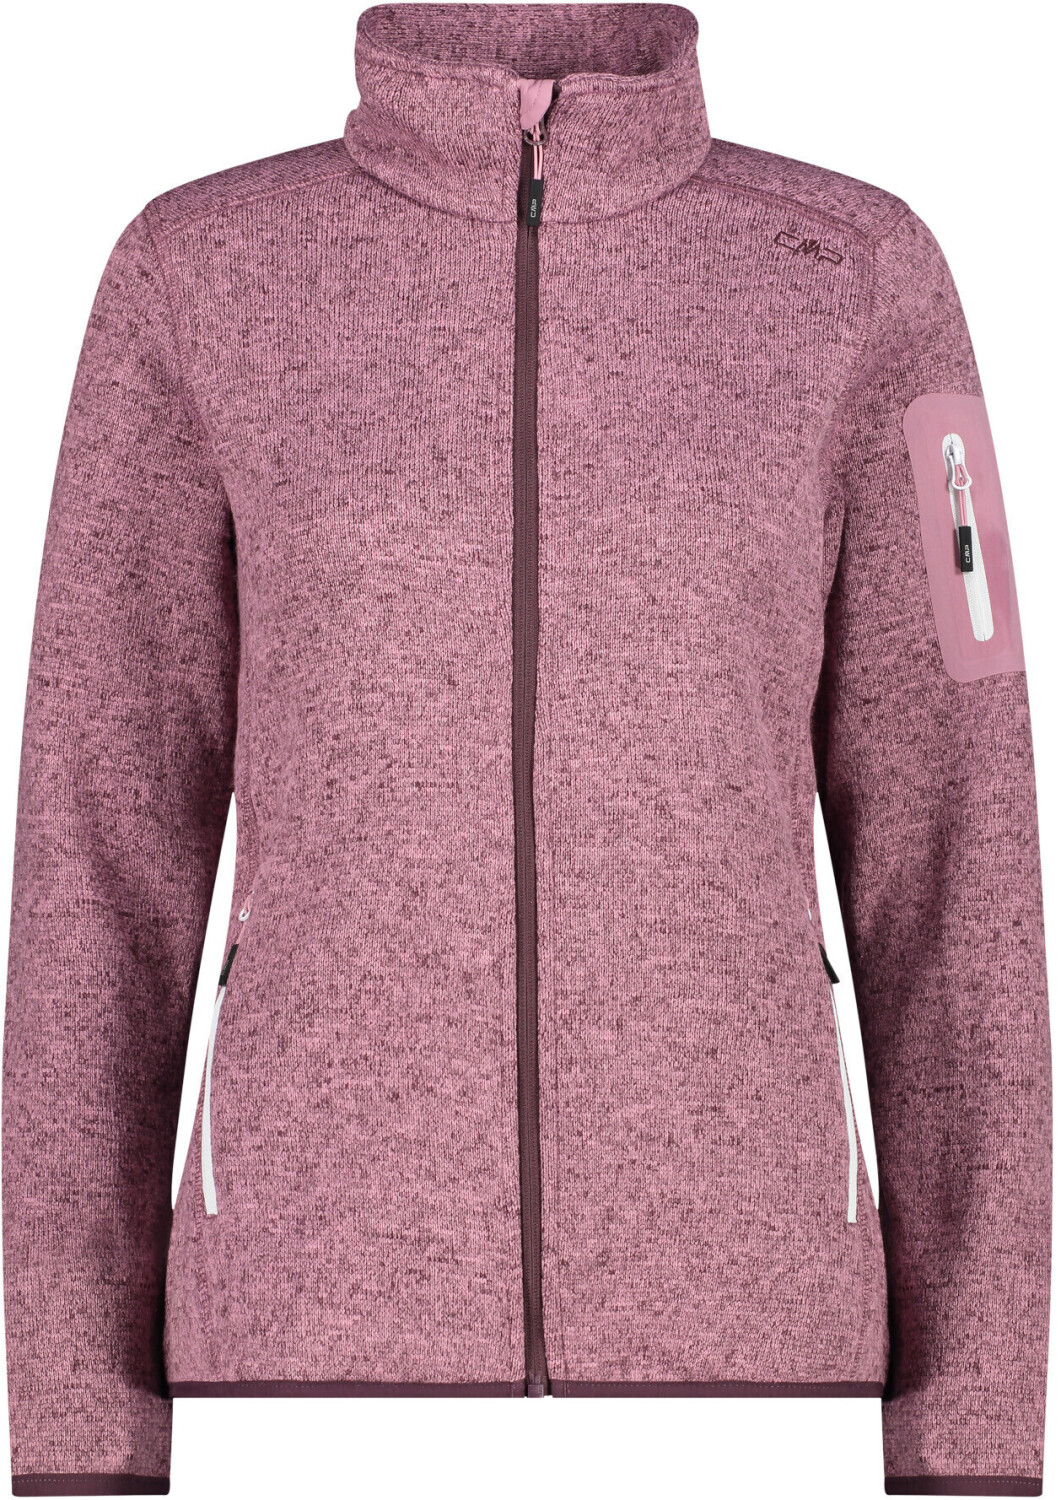 CMP Fleece Jacket Knit-Tech Melange (3H14746) fard-plum ab € 34,95 |  Preisvergleich bei